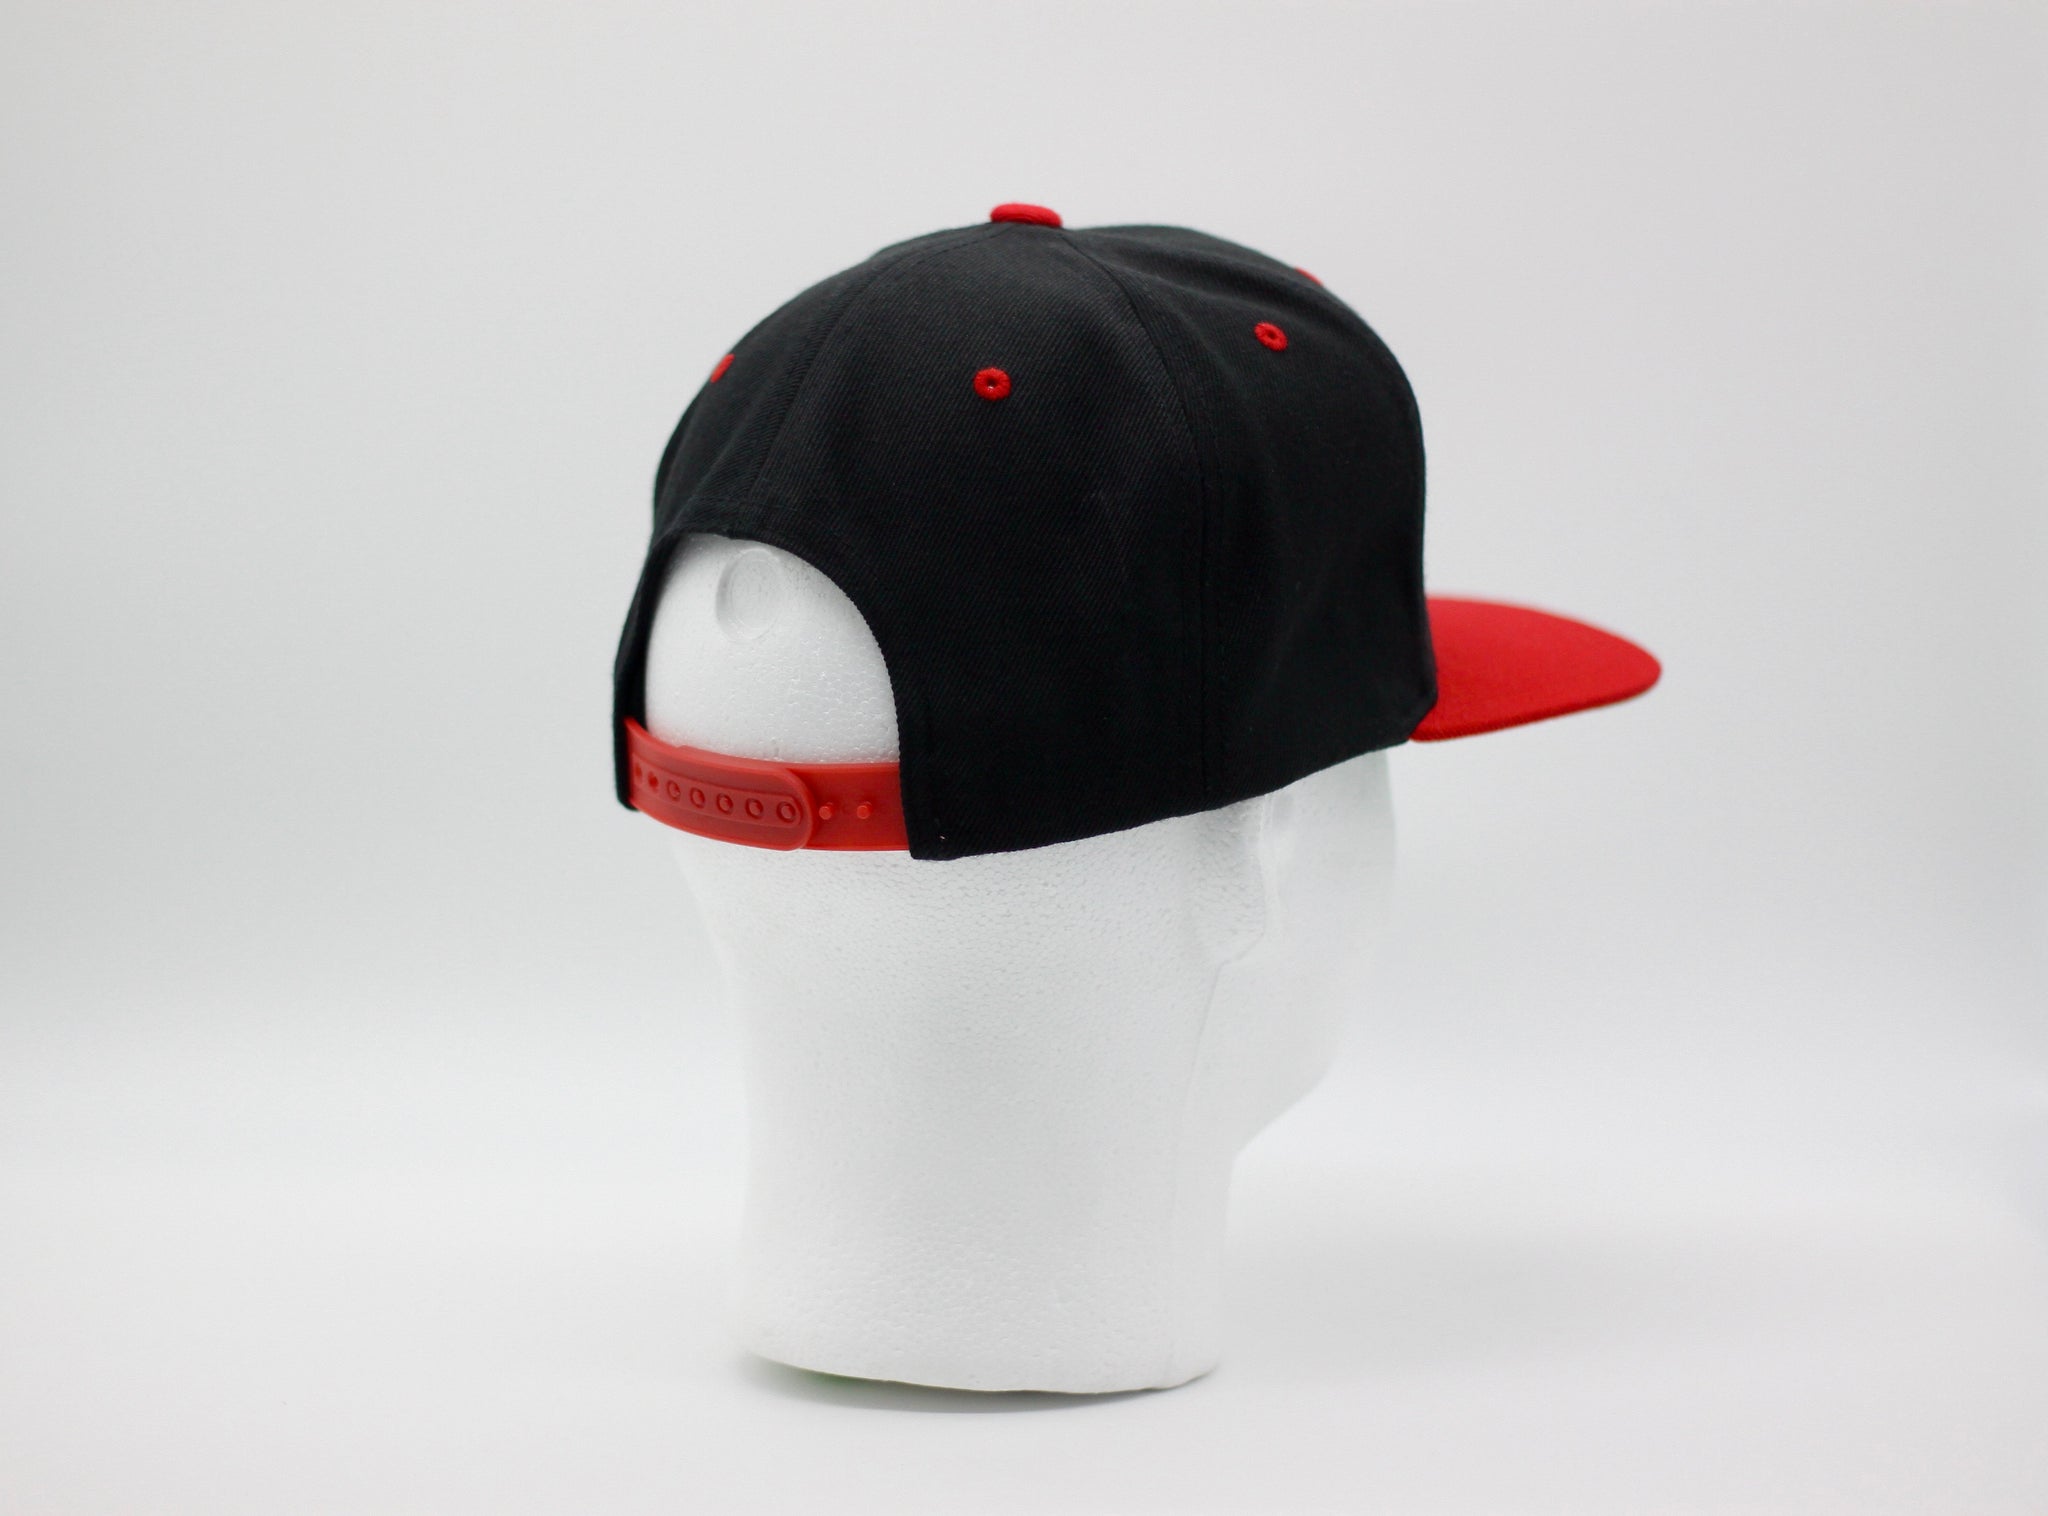 Tijeyi Mens Snapback Hats Softball Theme Sports Baseball Cap for